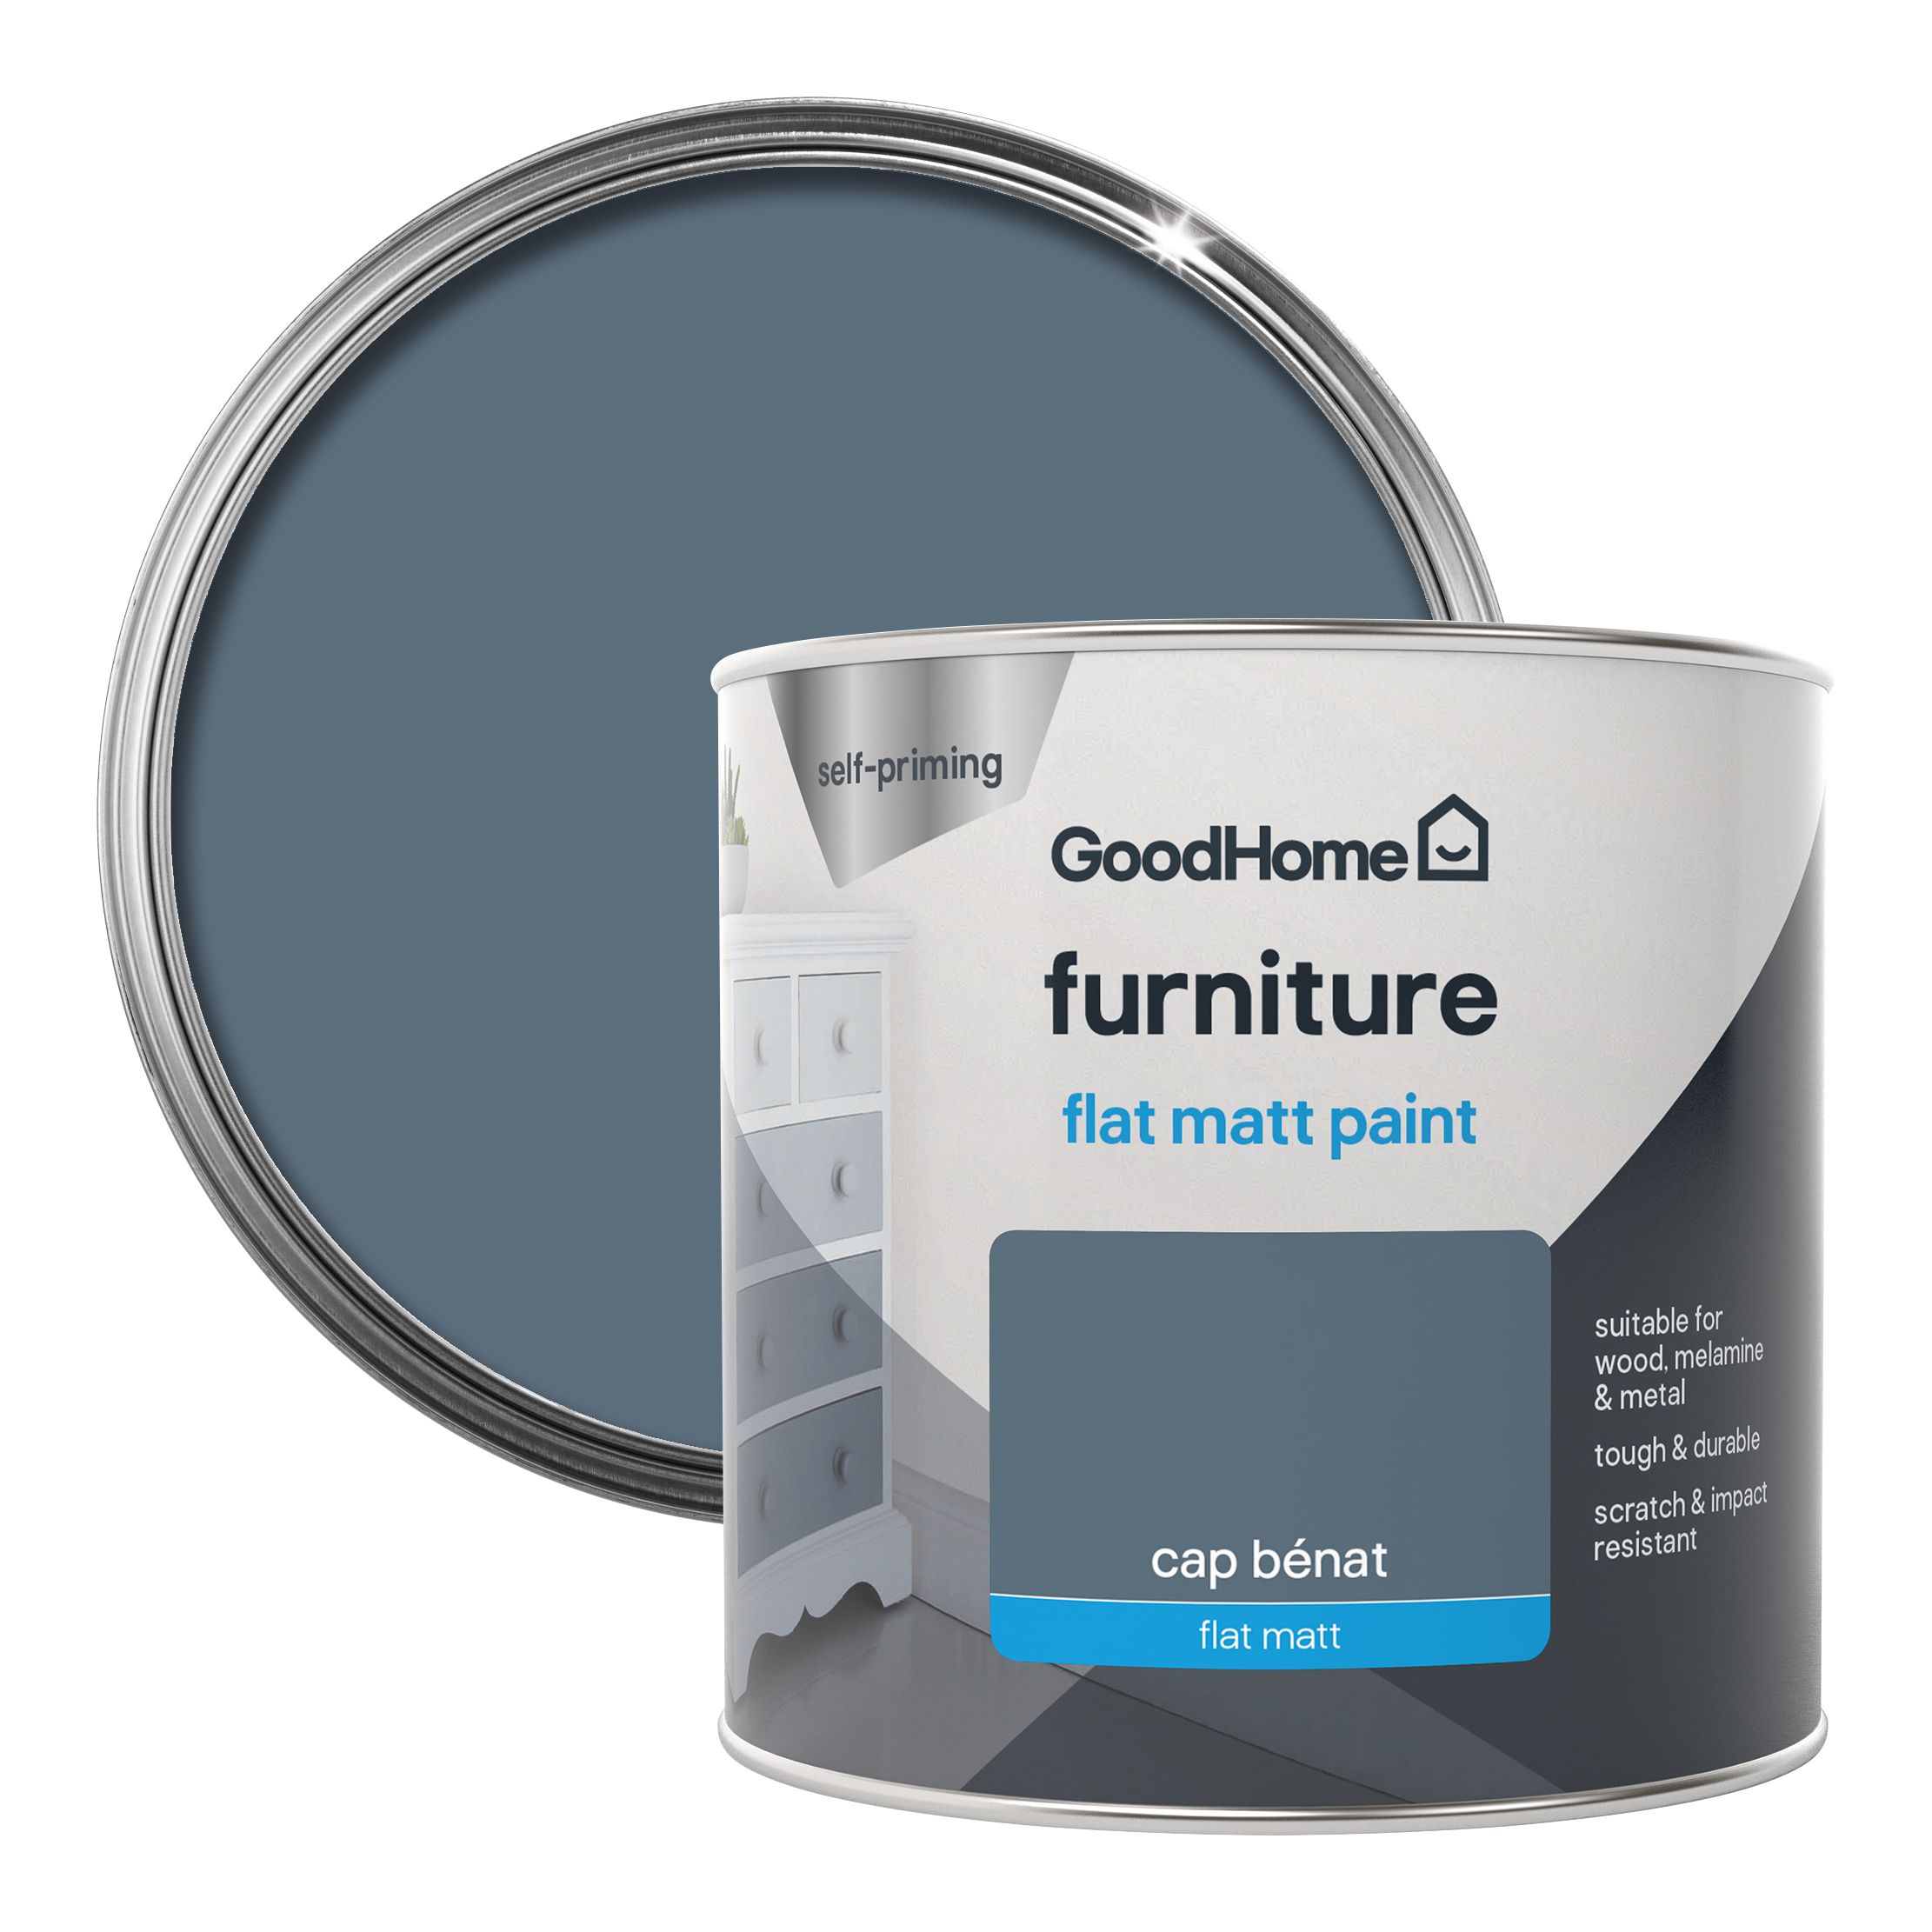 GoodHome Cap benat Flat matt Furniture paint, 500ml